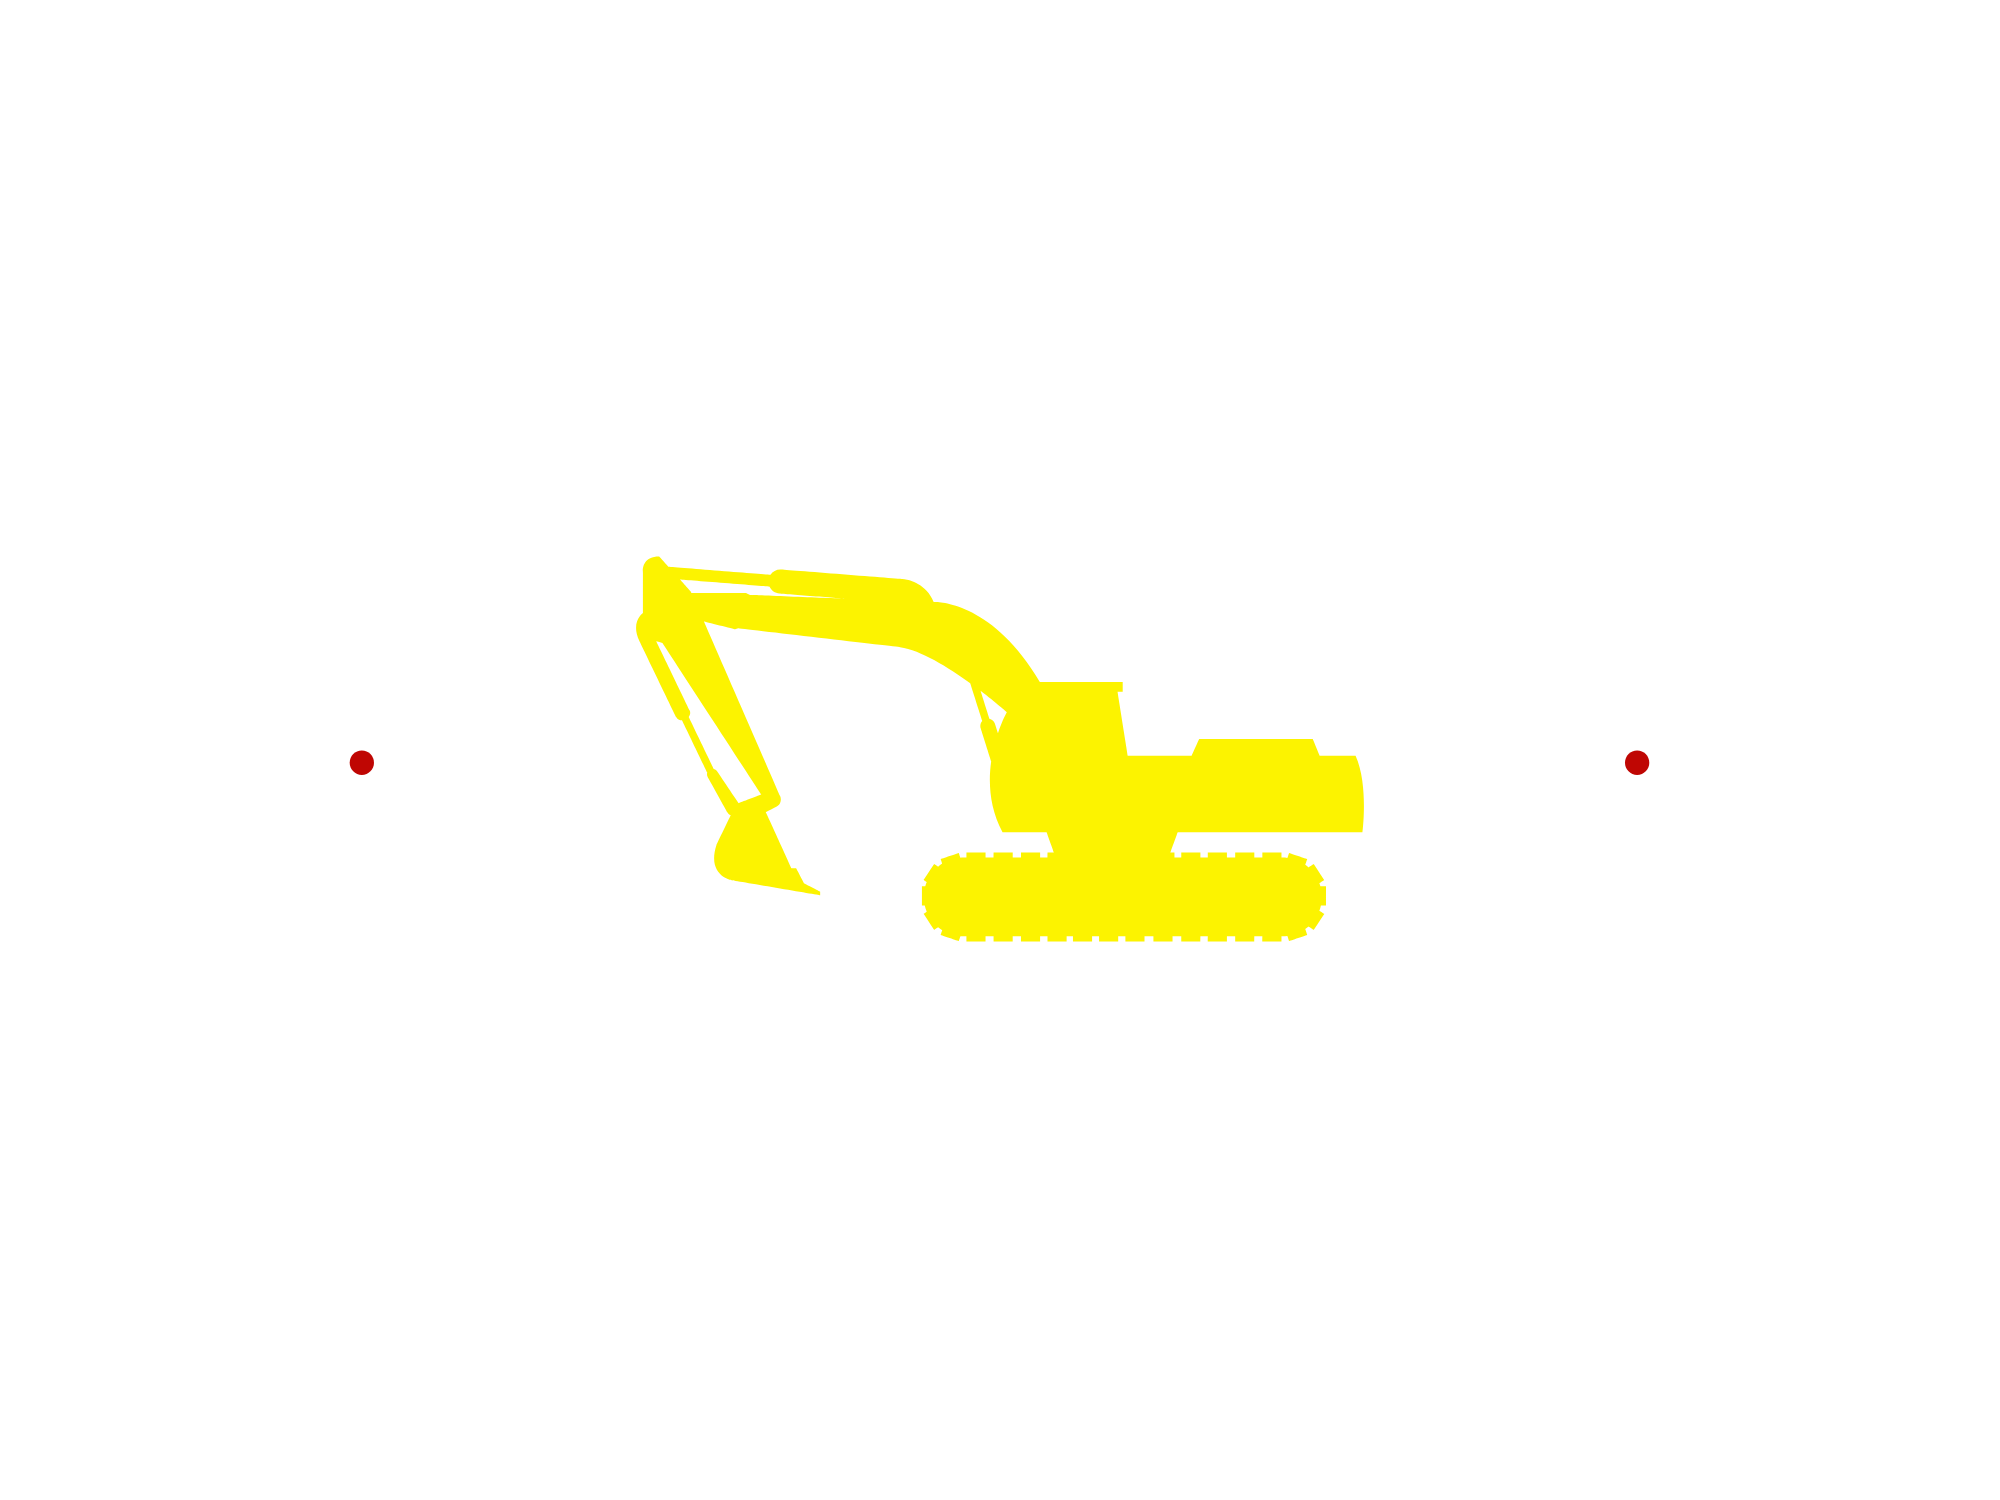 The Earth Worx